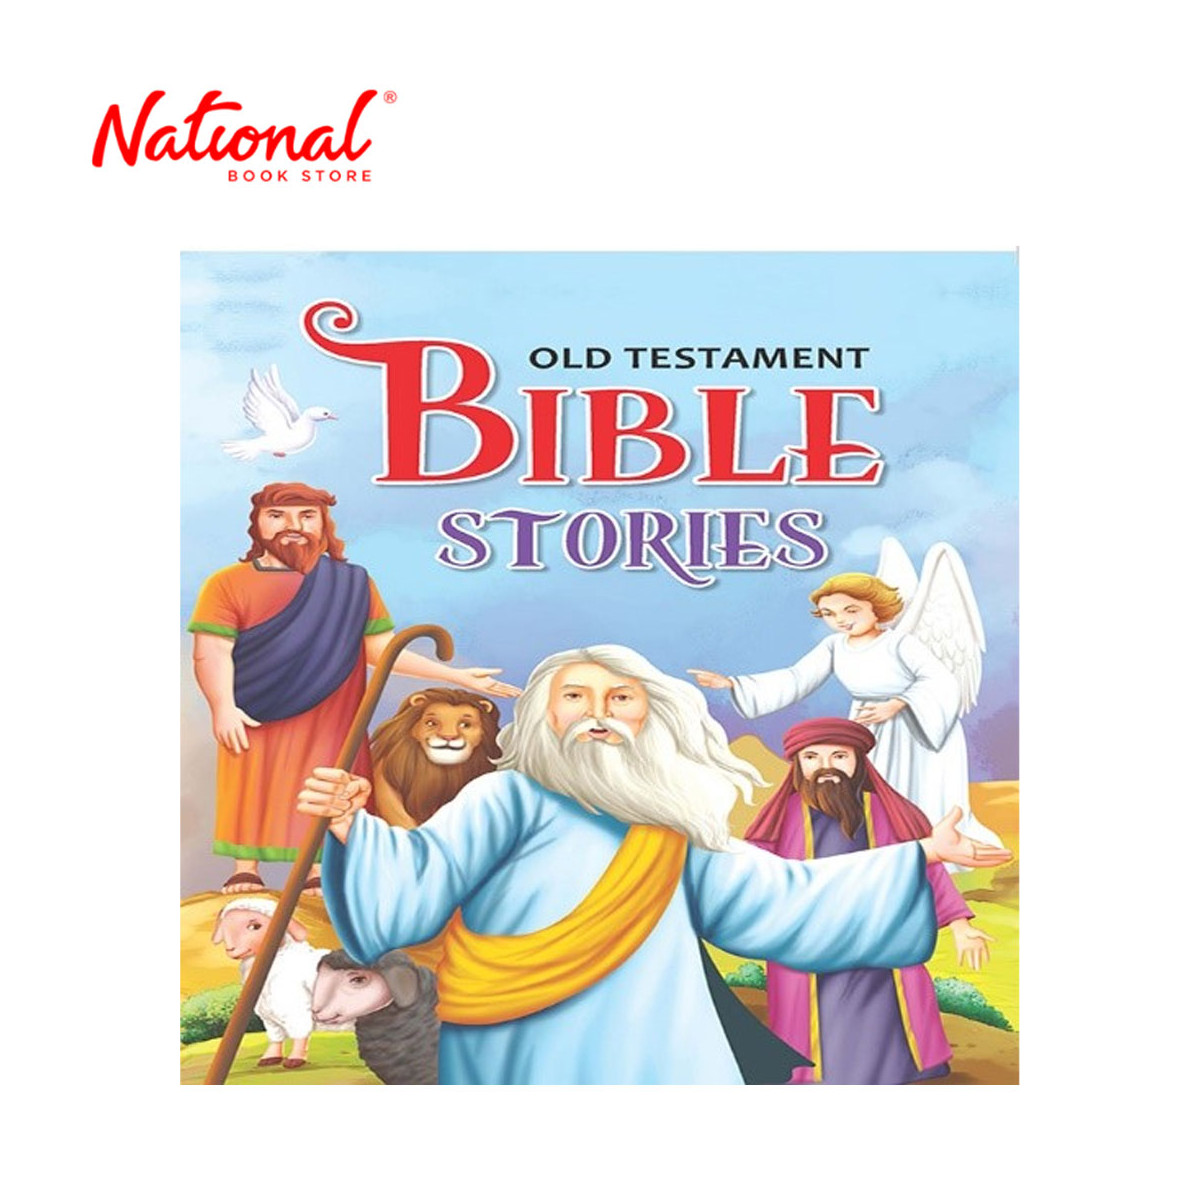 Old Testament Bible Stories By Doreen De Castro - Hardcover - Bible Stories for Kids